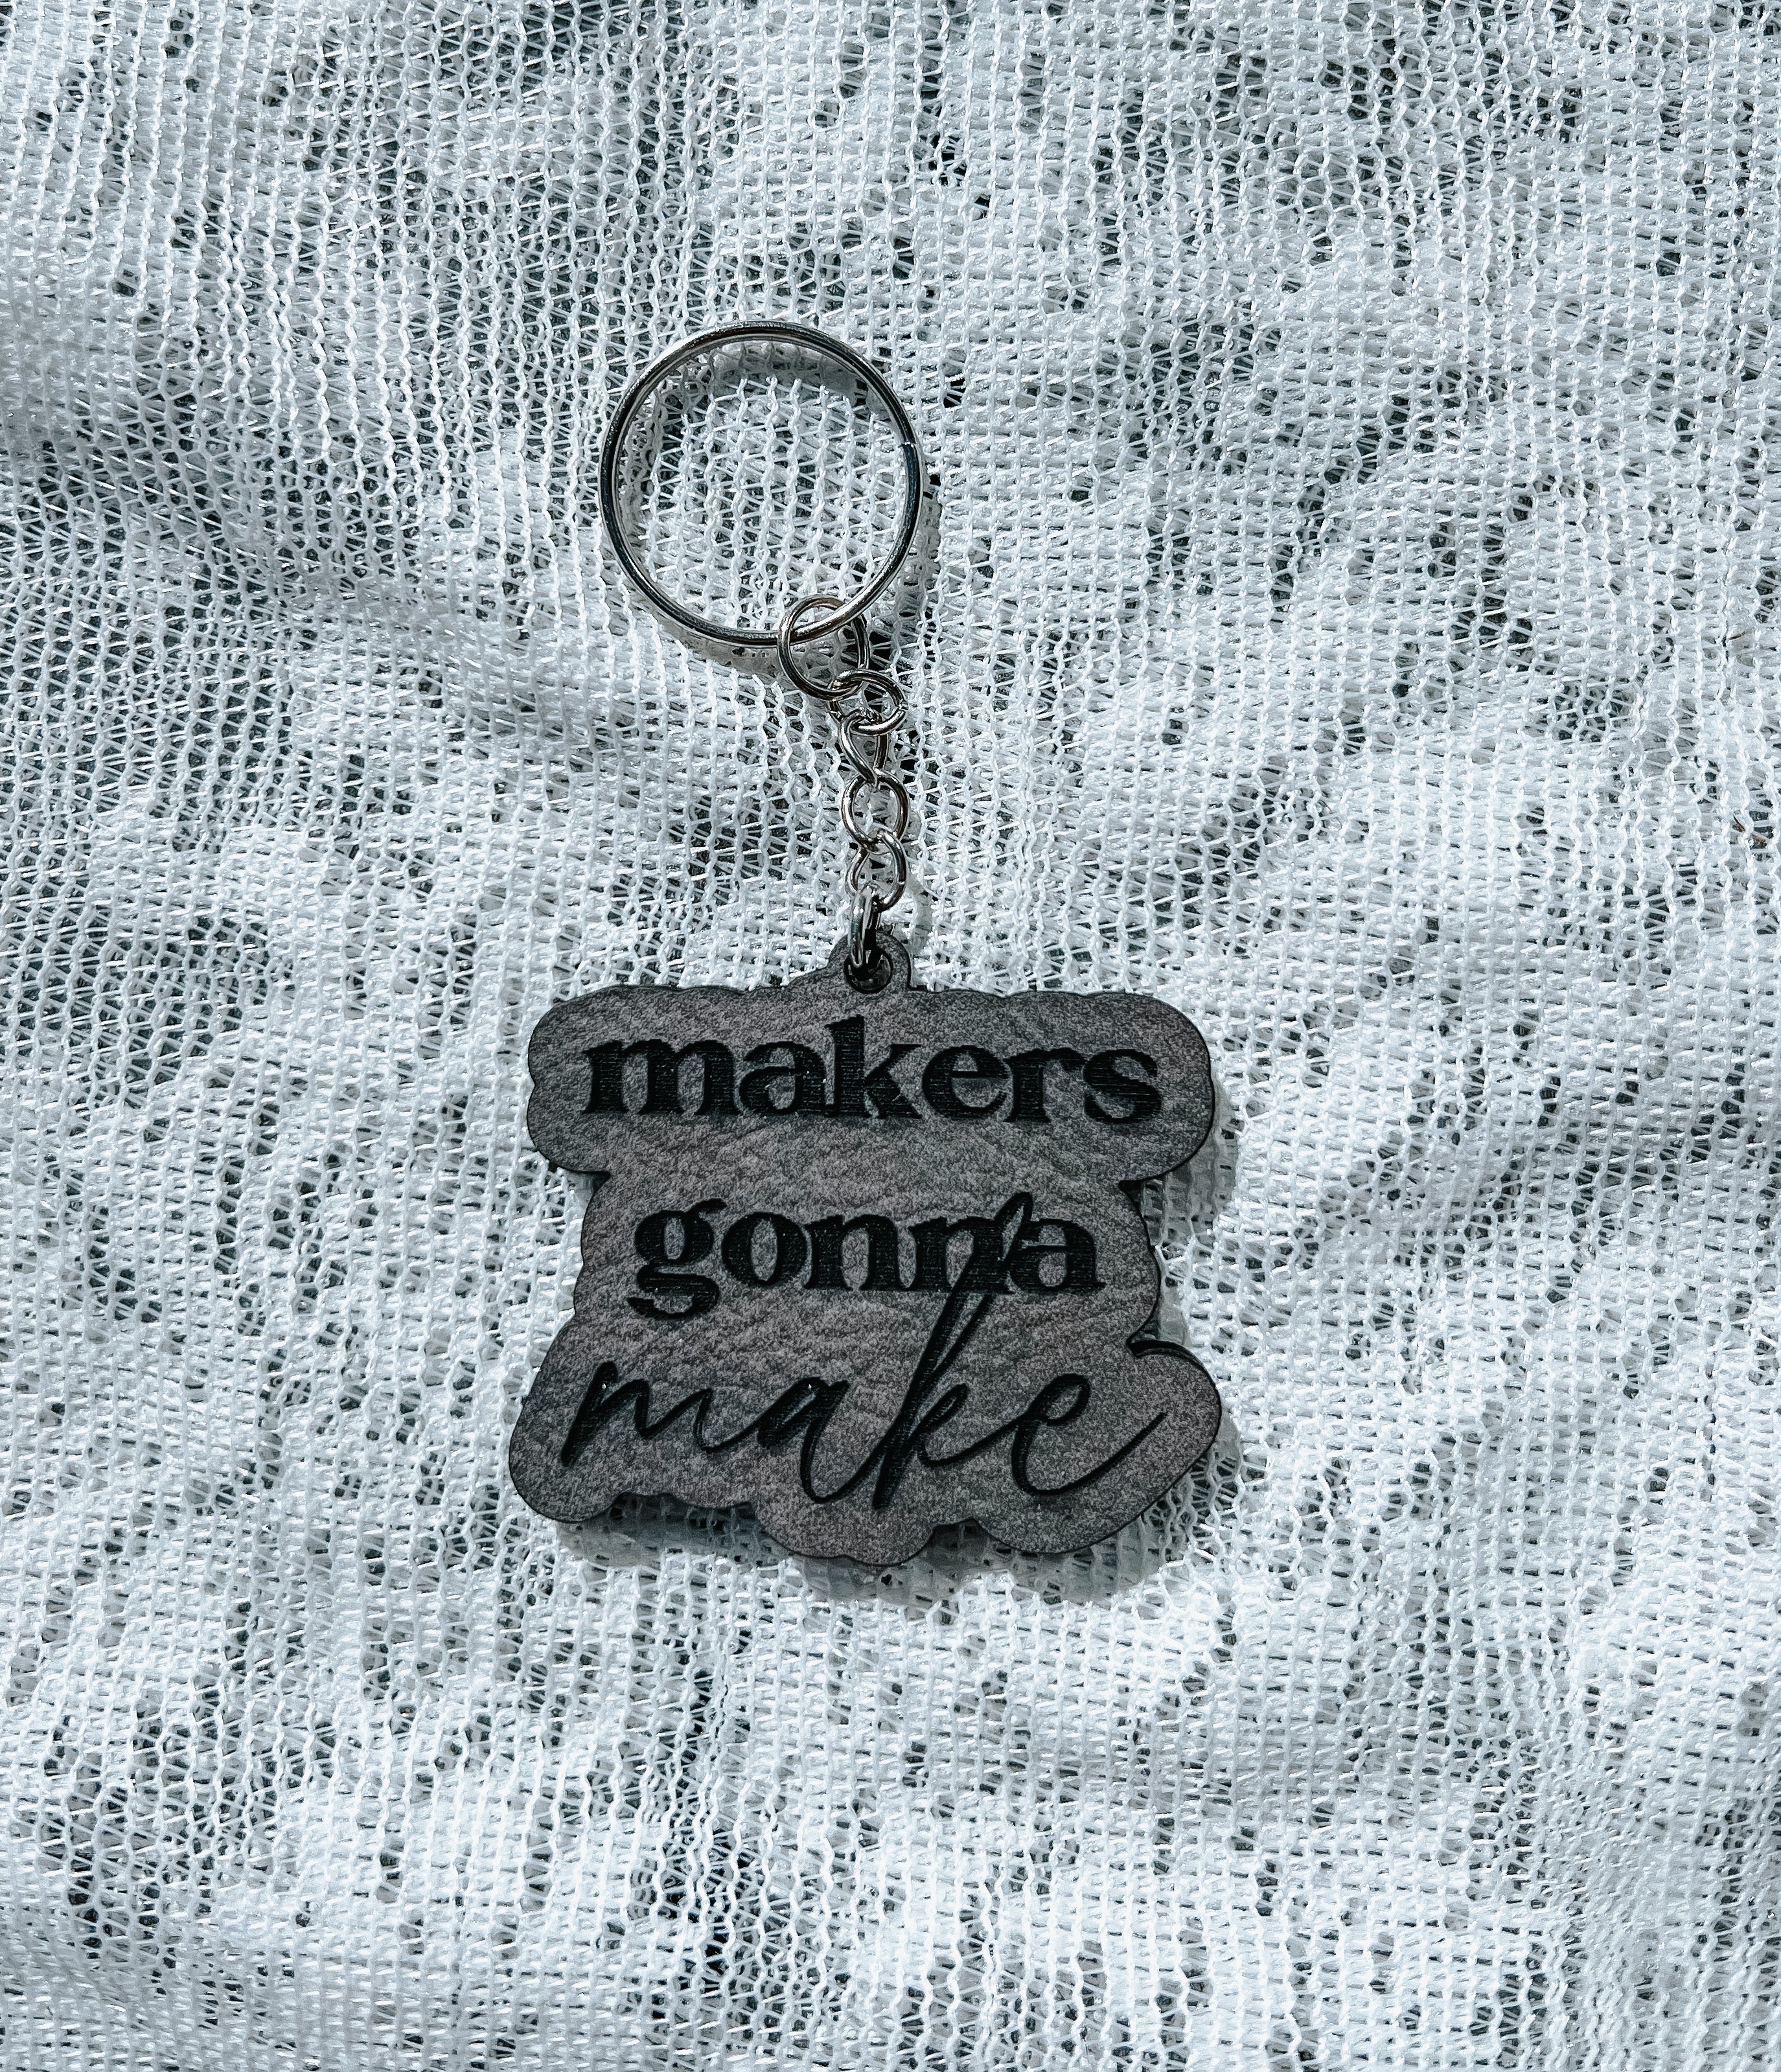 Makers gonna make keychain